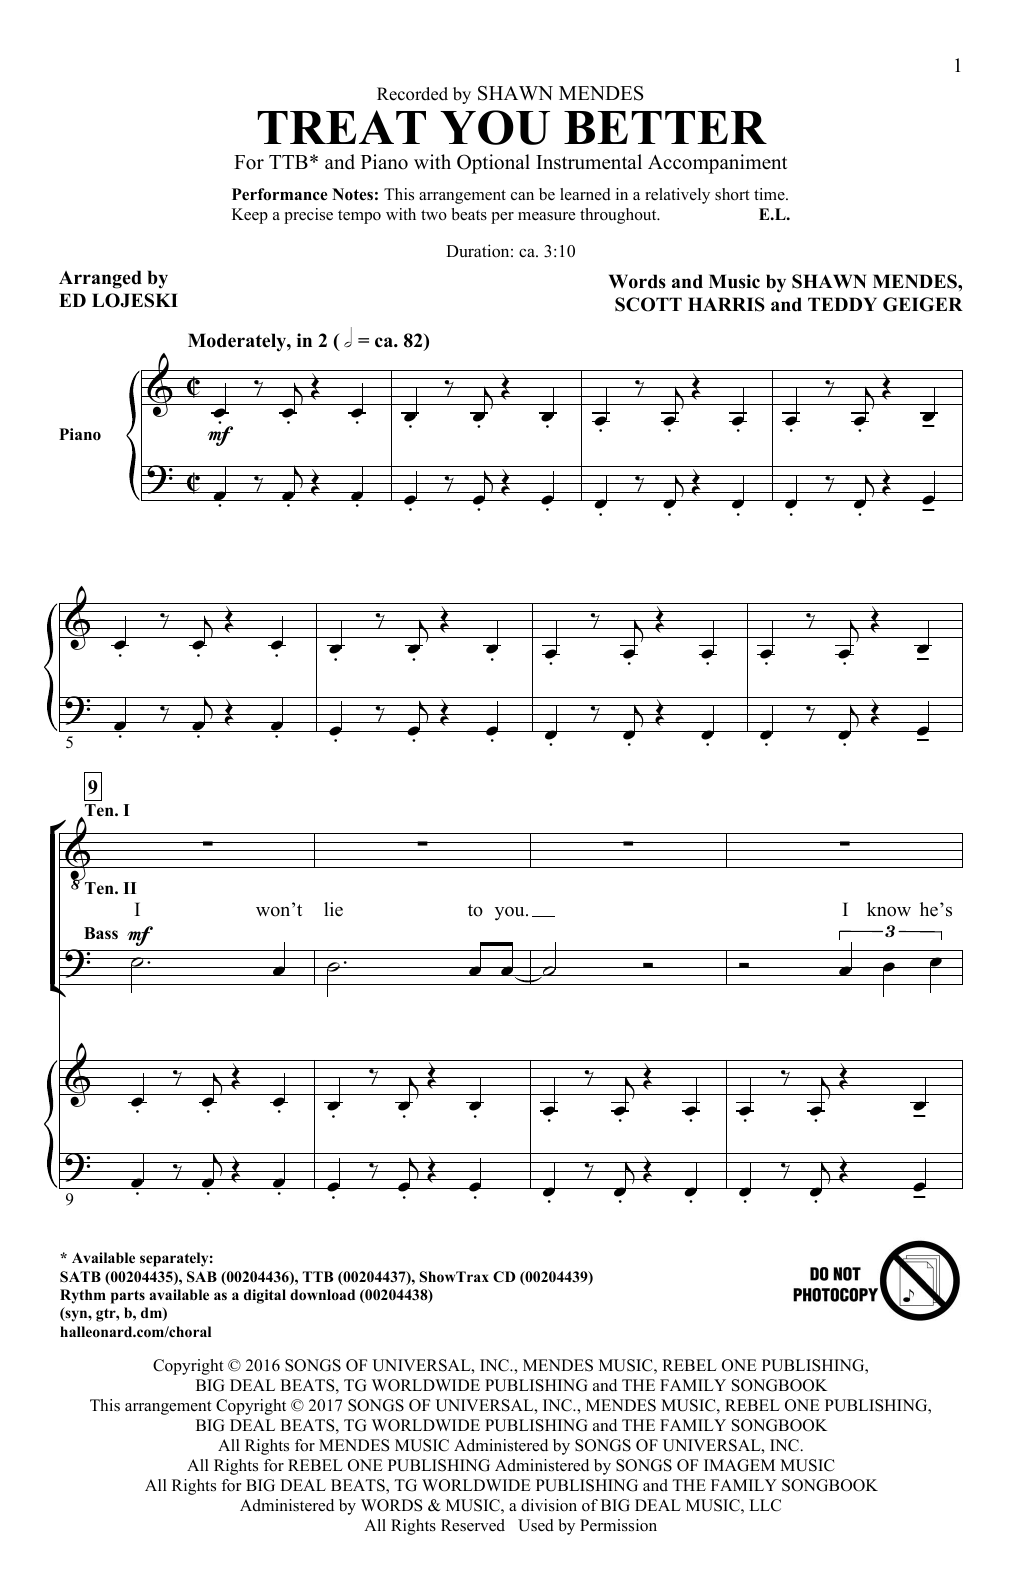 Shawn Mendes Treat You Better (arr. Ed Lojeski) Sheet Music Notes & Chords for SAB - Download or Print PDF